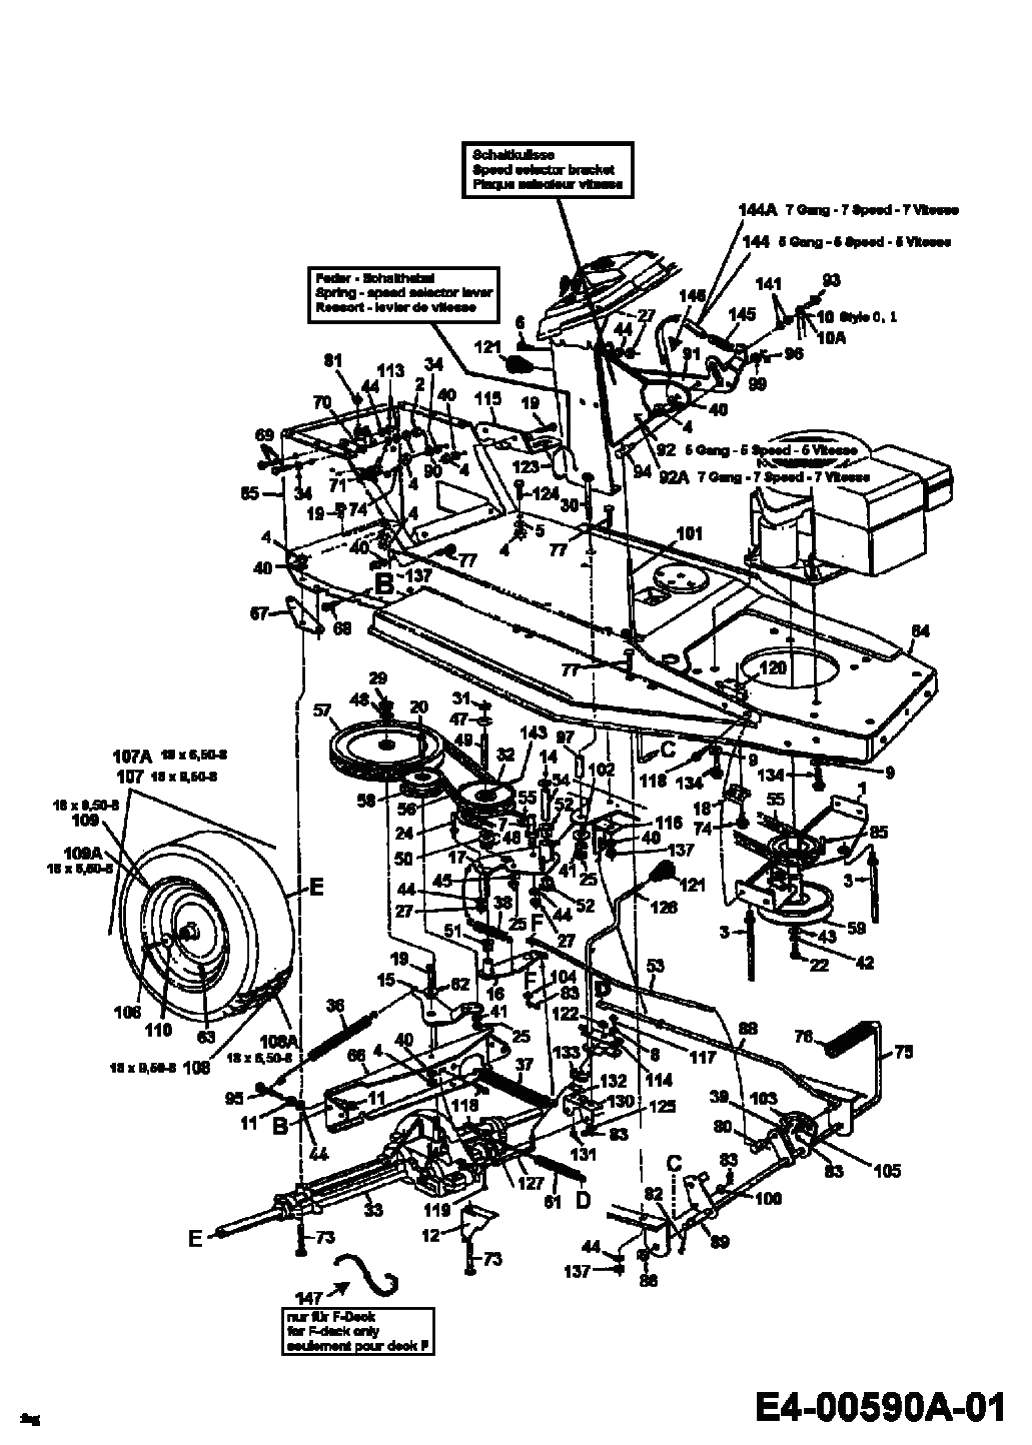 MTD Артикул 13A1451C600 (год выпуска 1998). Система привода, шкив двигателя, педали, задние колеса